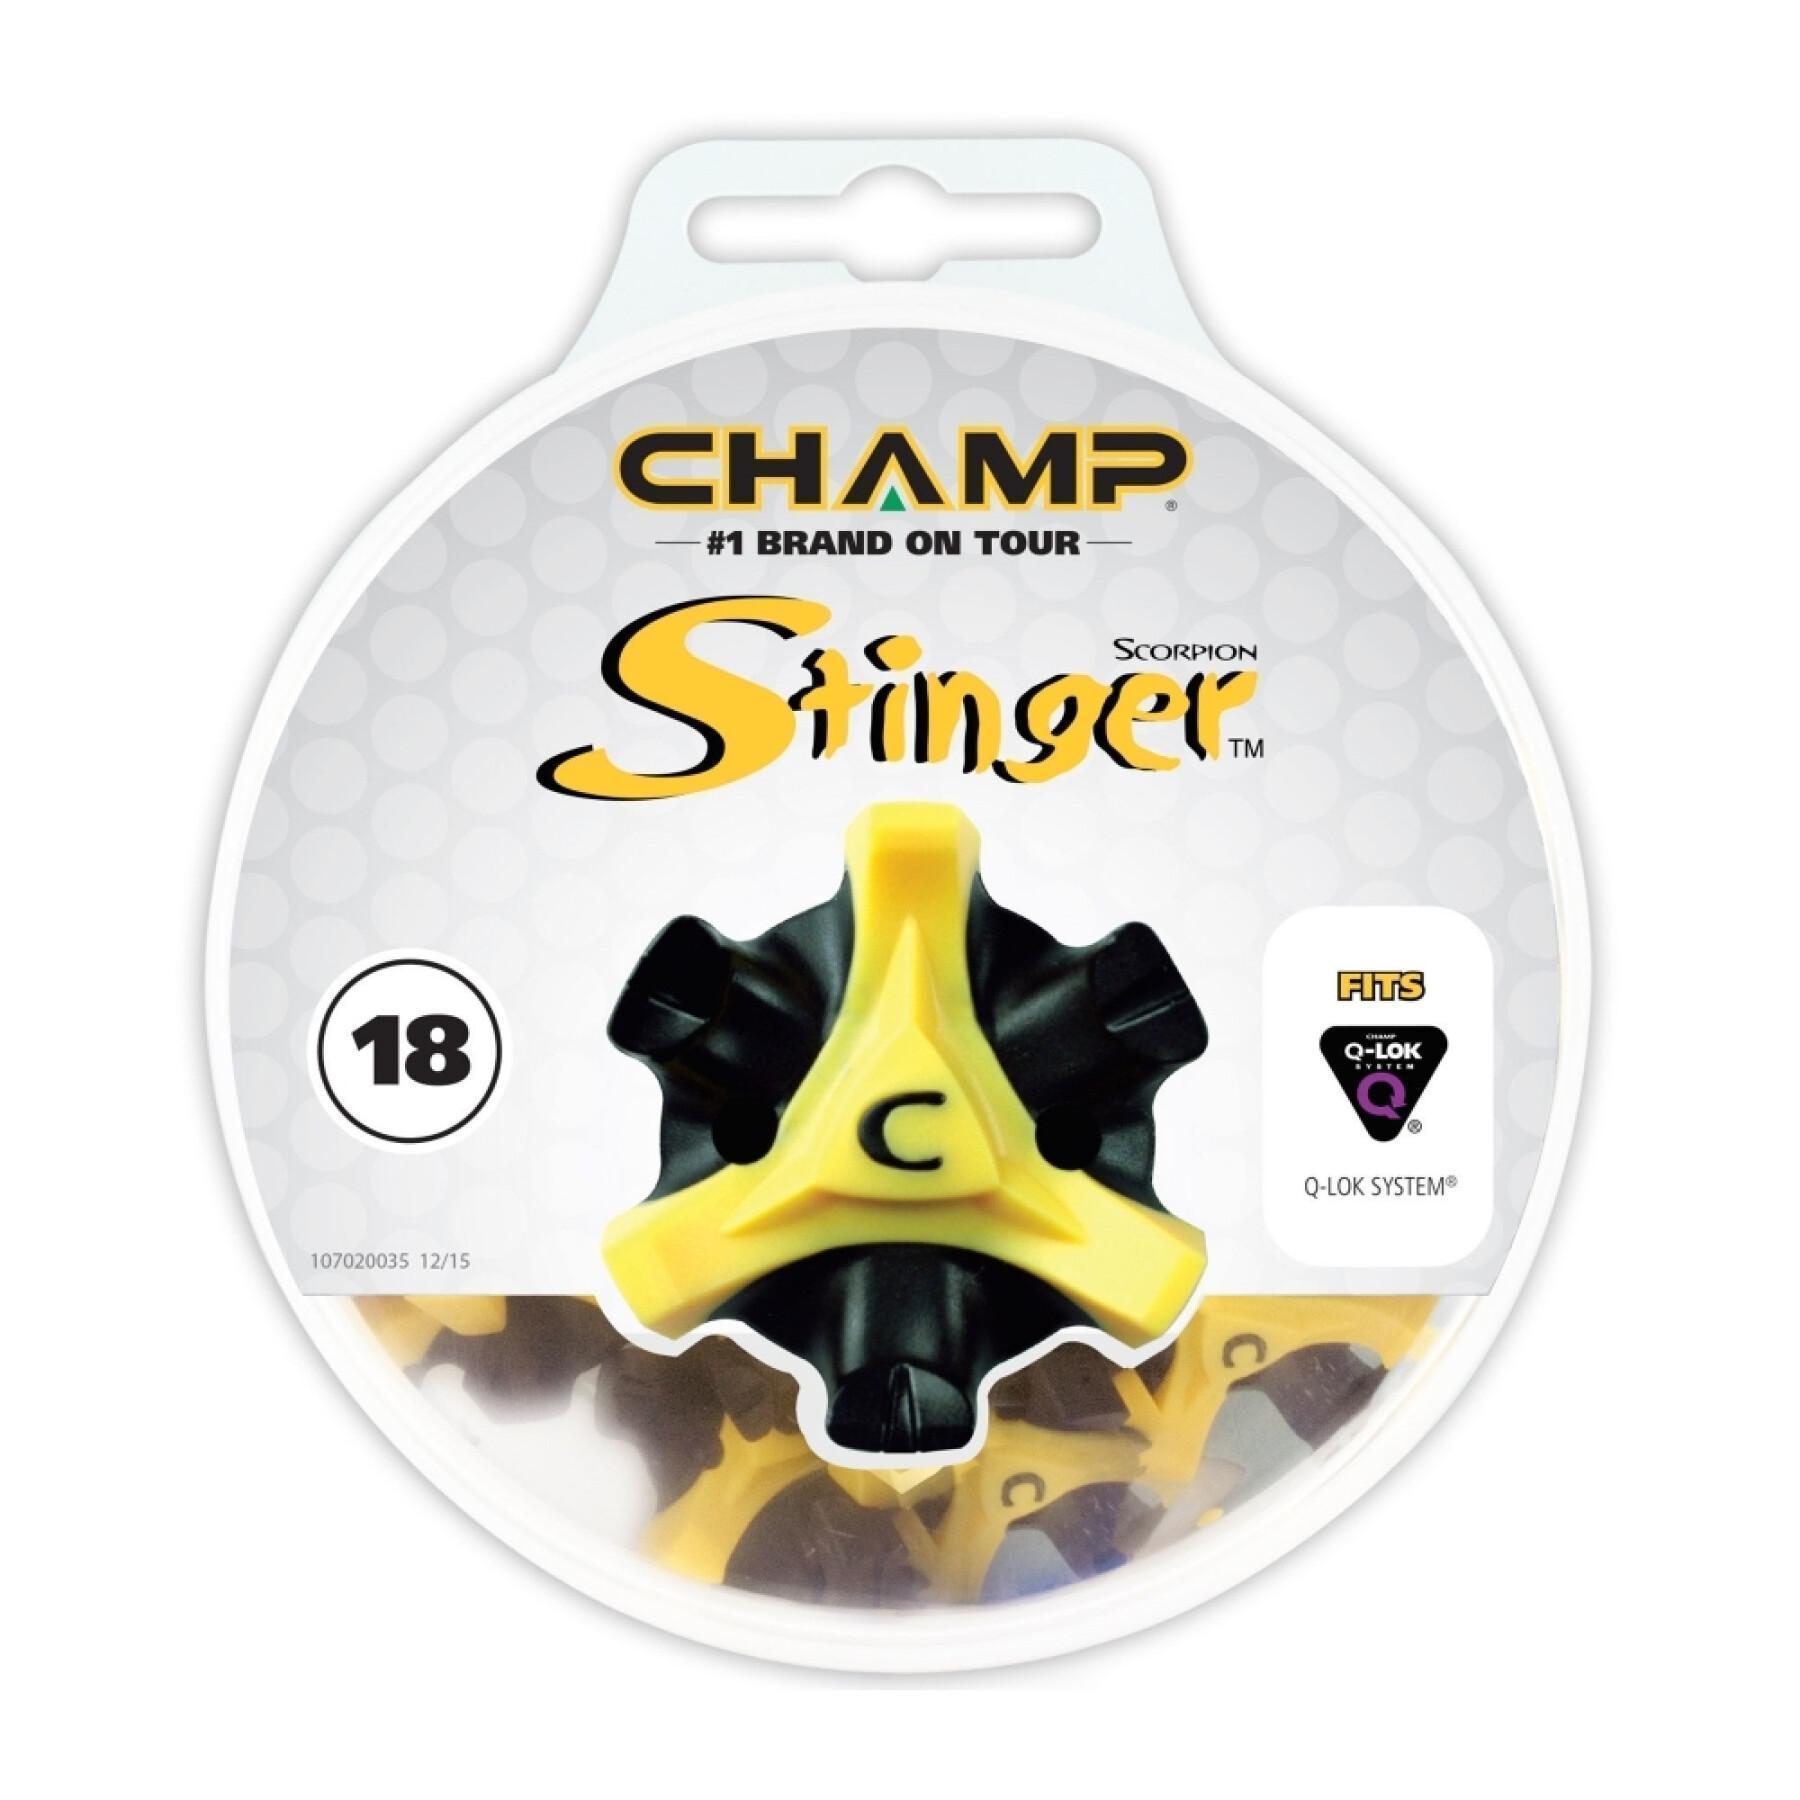 Zacisk Champ Stinger fast twist 3,0 disk